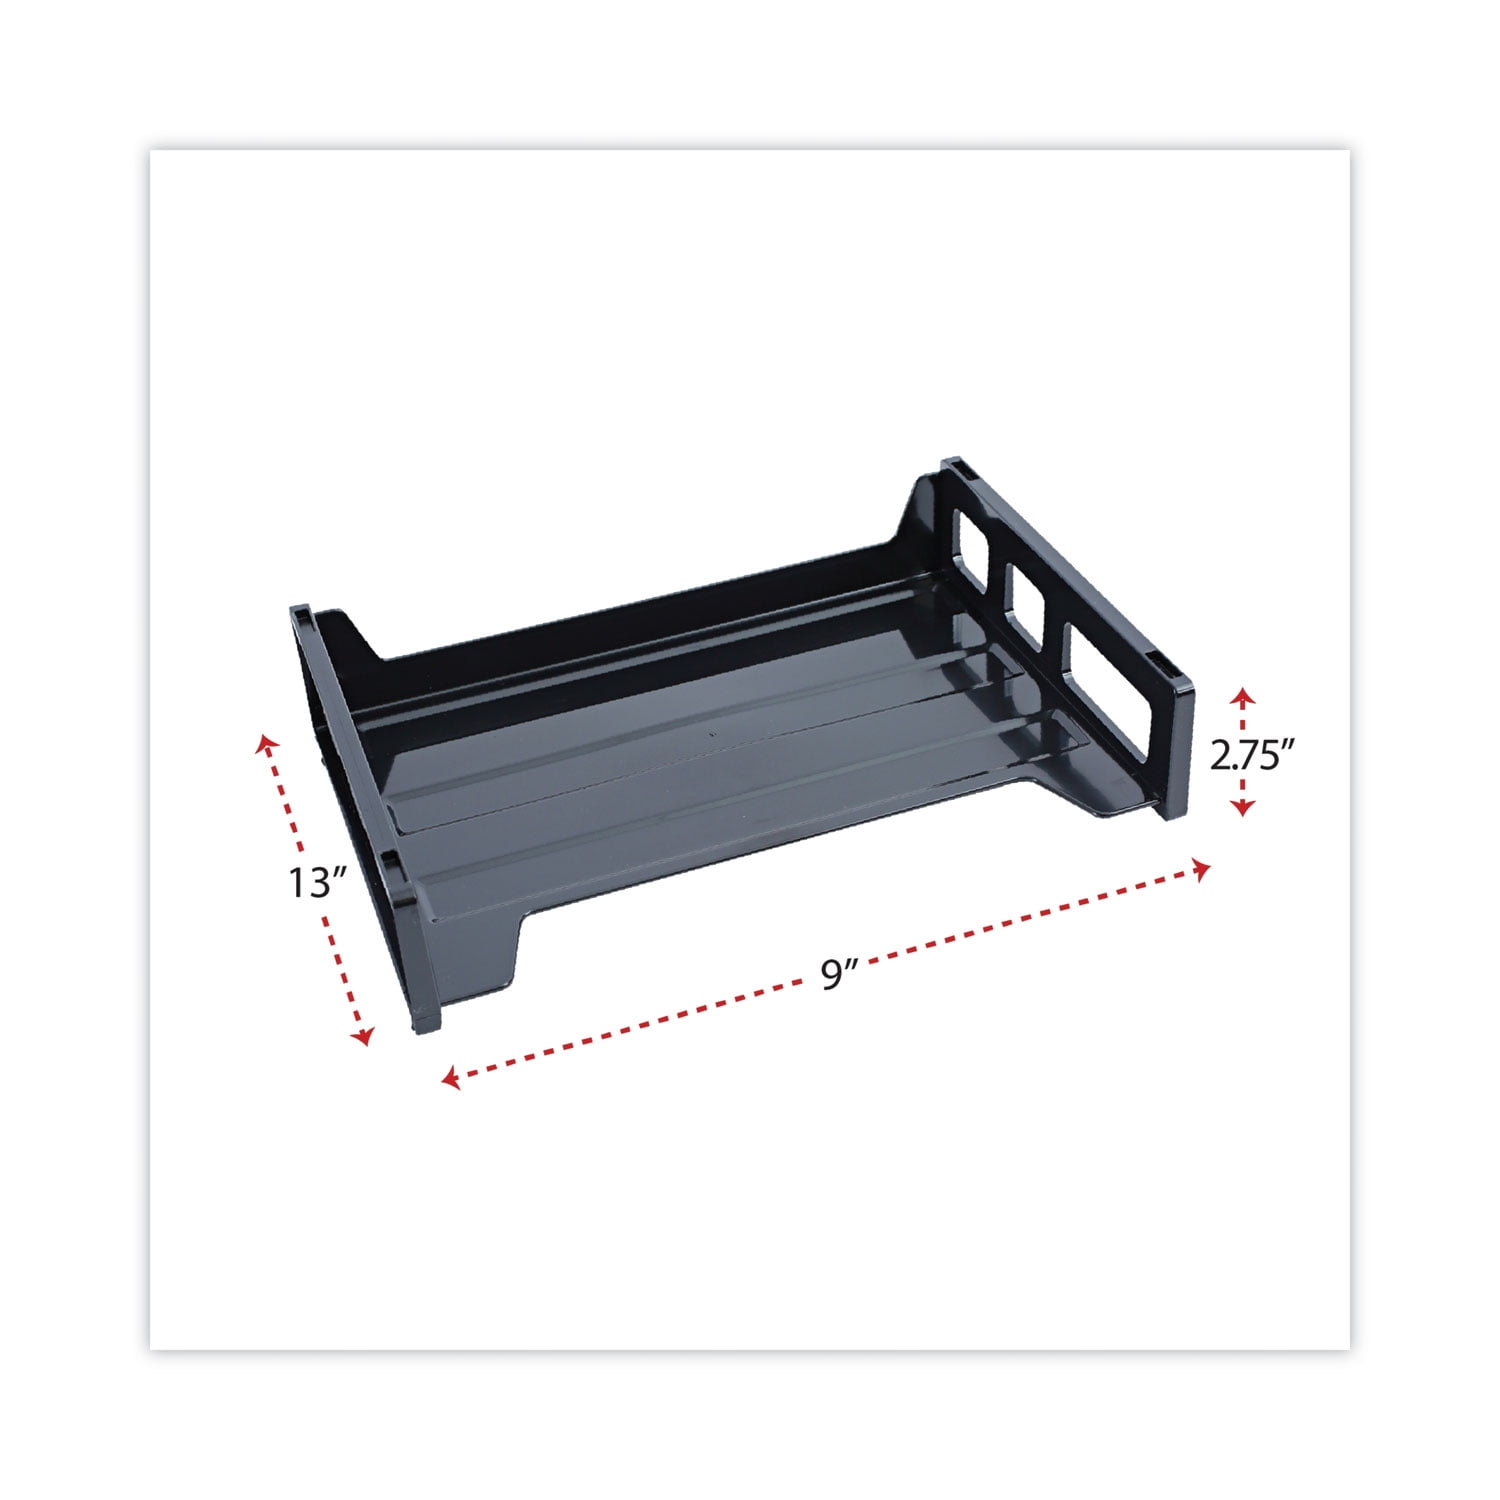 2 Pack - Simple Houseware 6 Trays Desktop Document Letter Tray Organizer Black